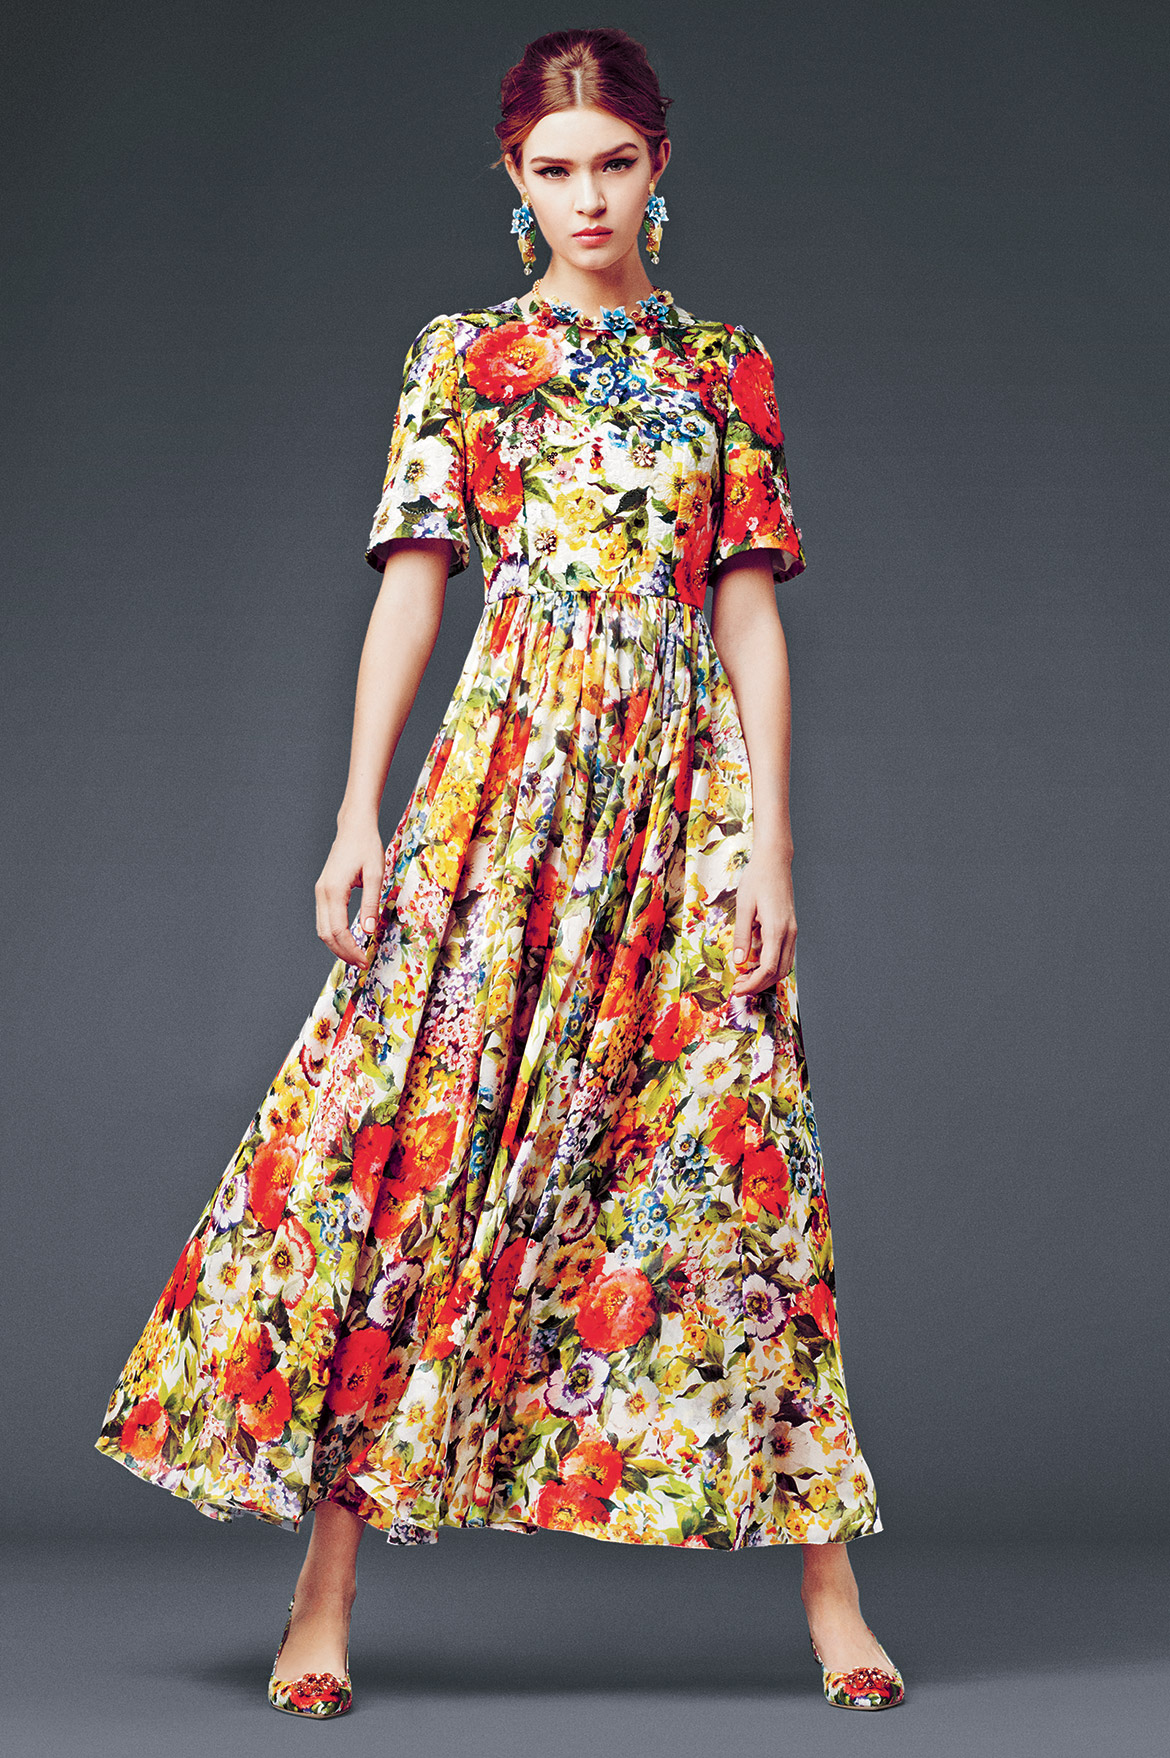 10 most beautiful Dolce & Gabbana dresses – Spa Living